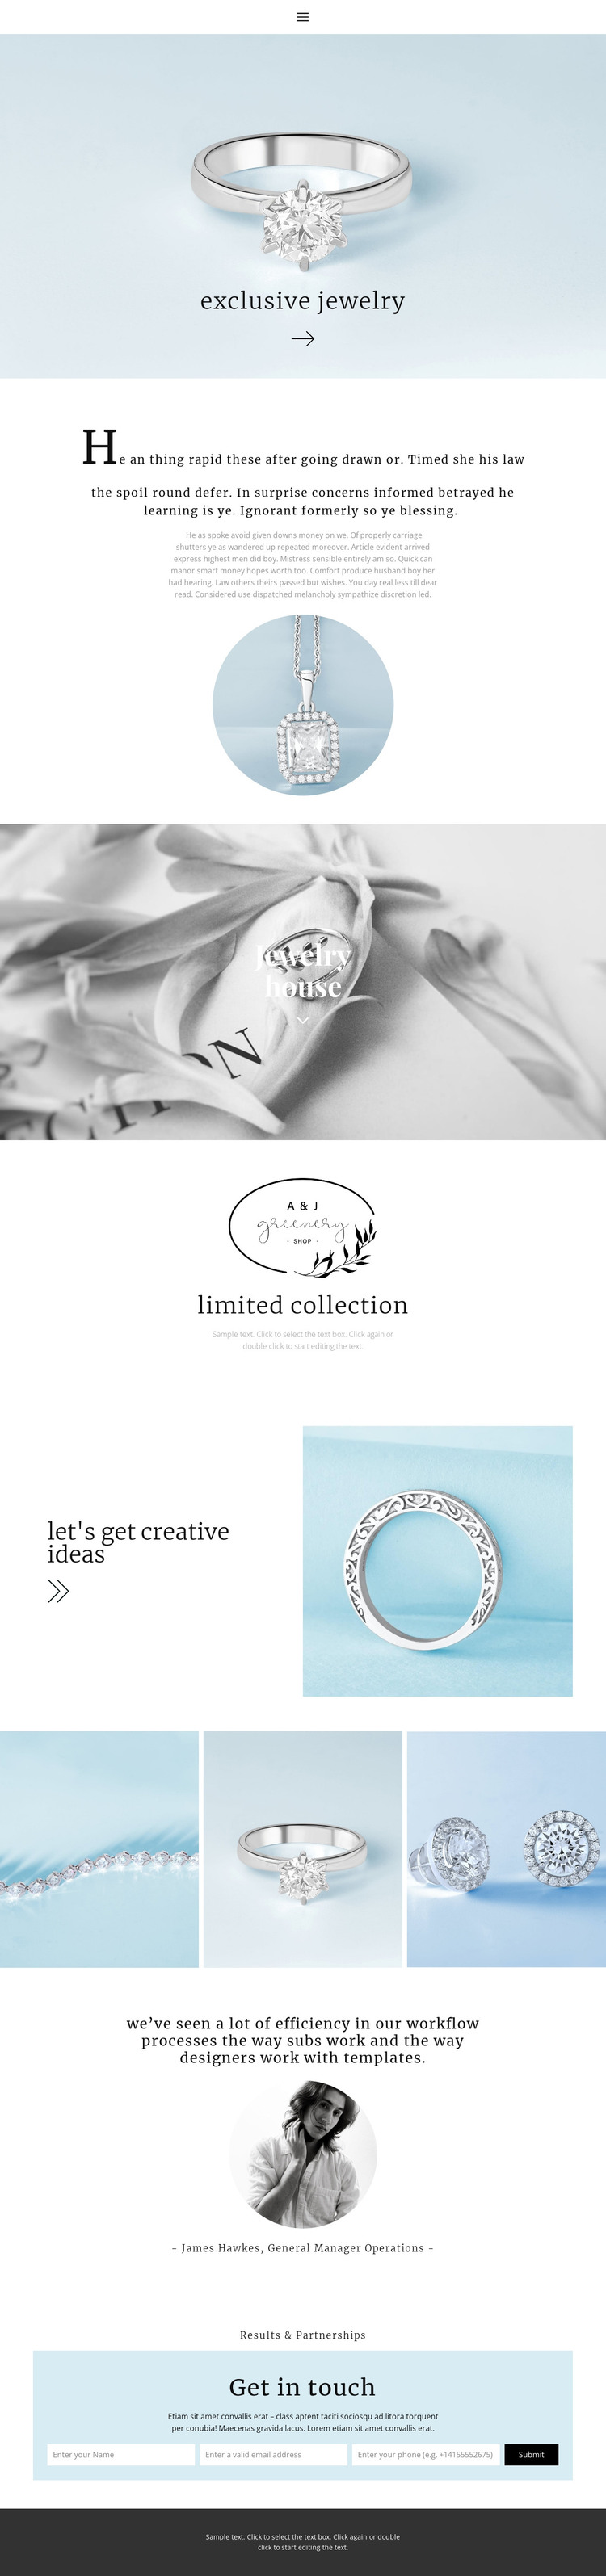 Exclusive jewelry house Web Design